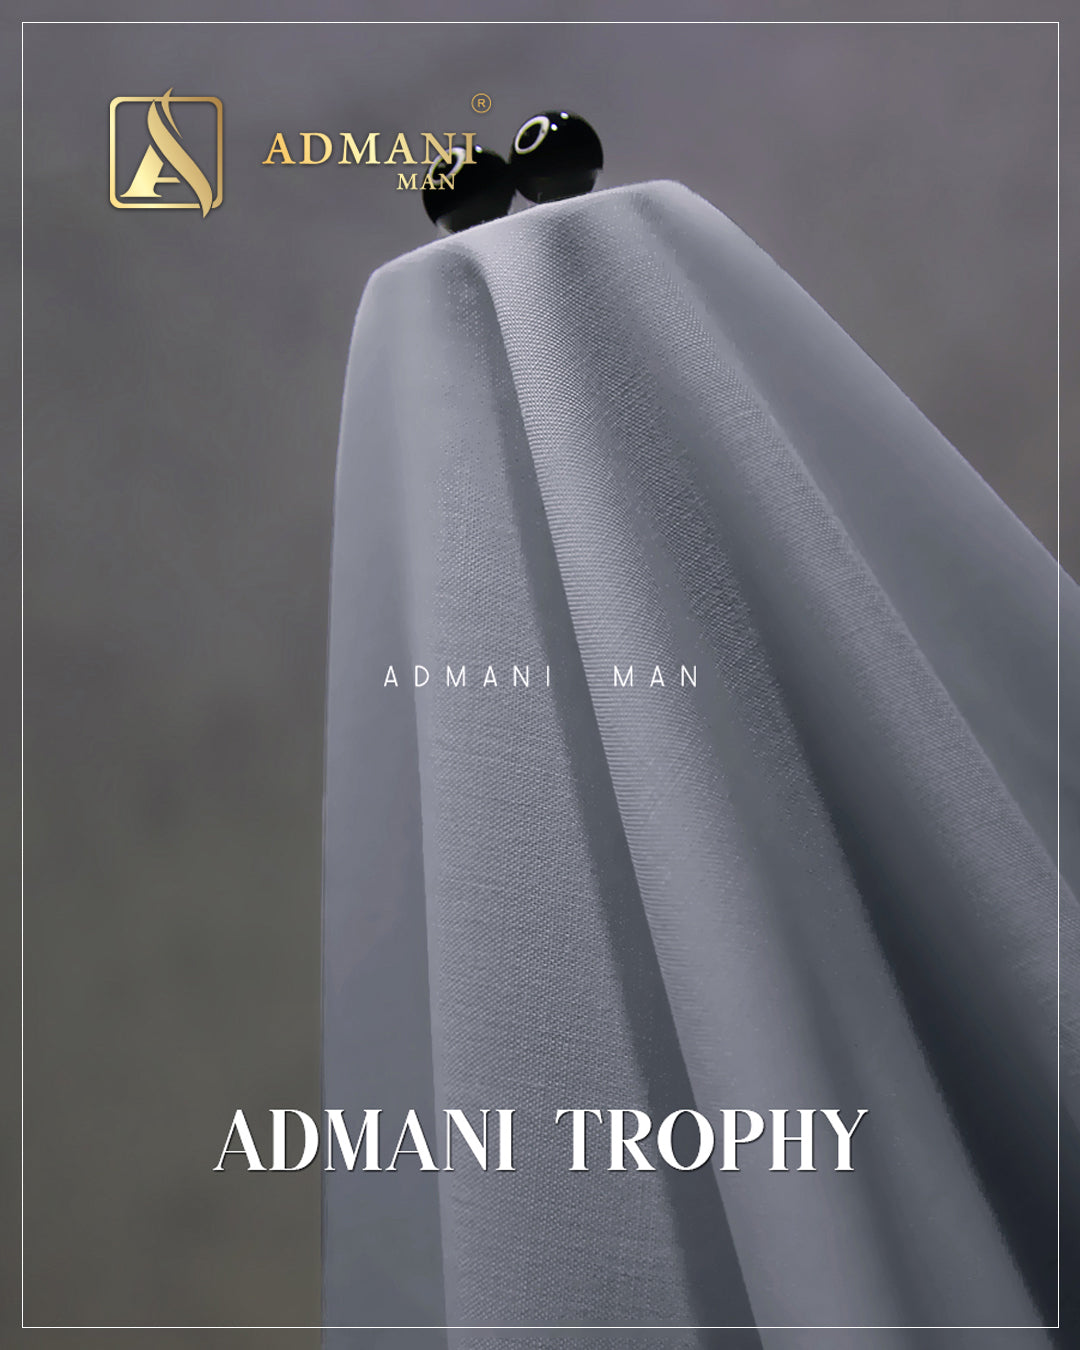 Admani Trophy